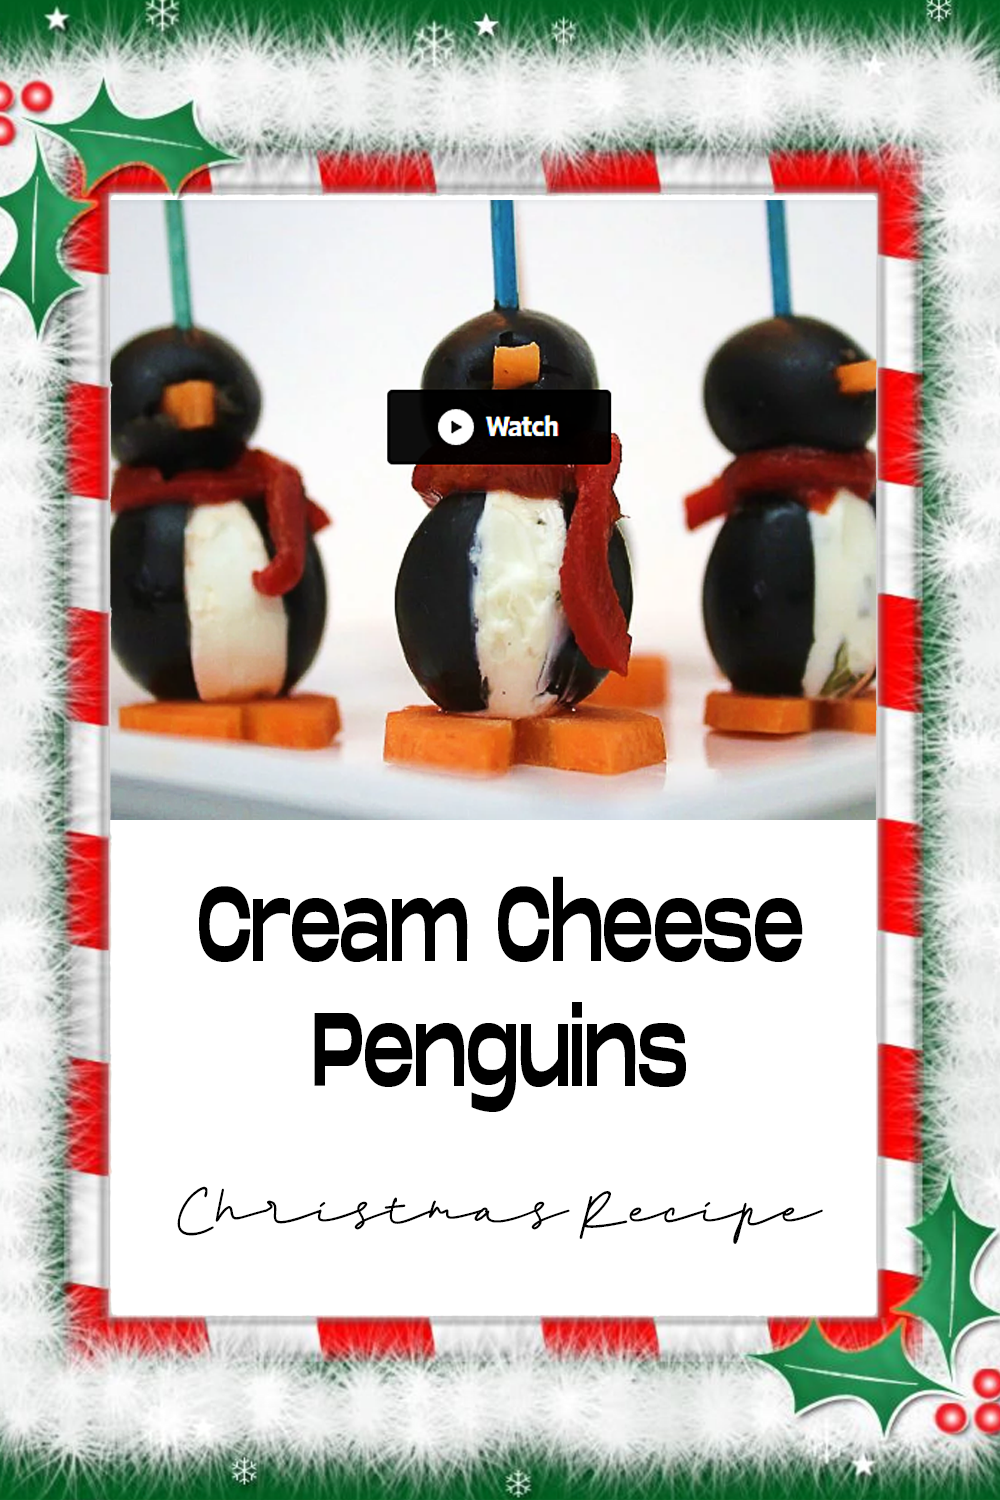 [Snacks] Cream Cheese Penguins for Christmas Recipe